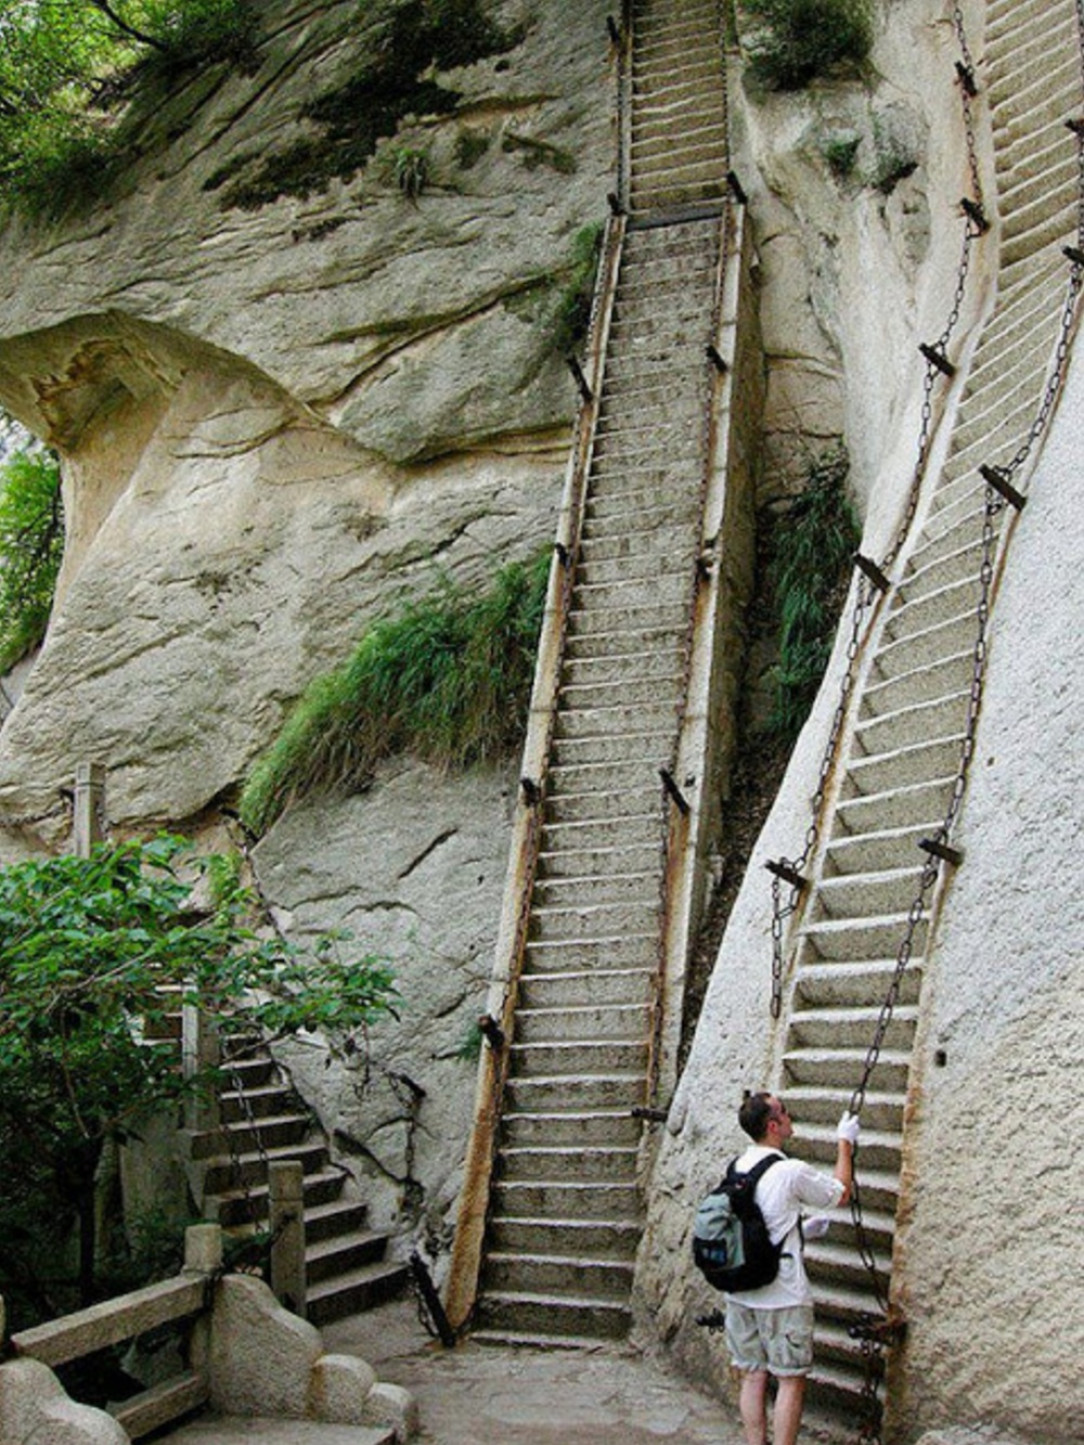 Extremely steep staircase at Hua Mountain, China